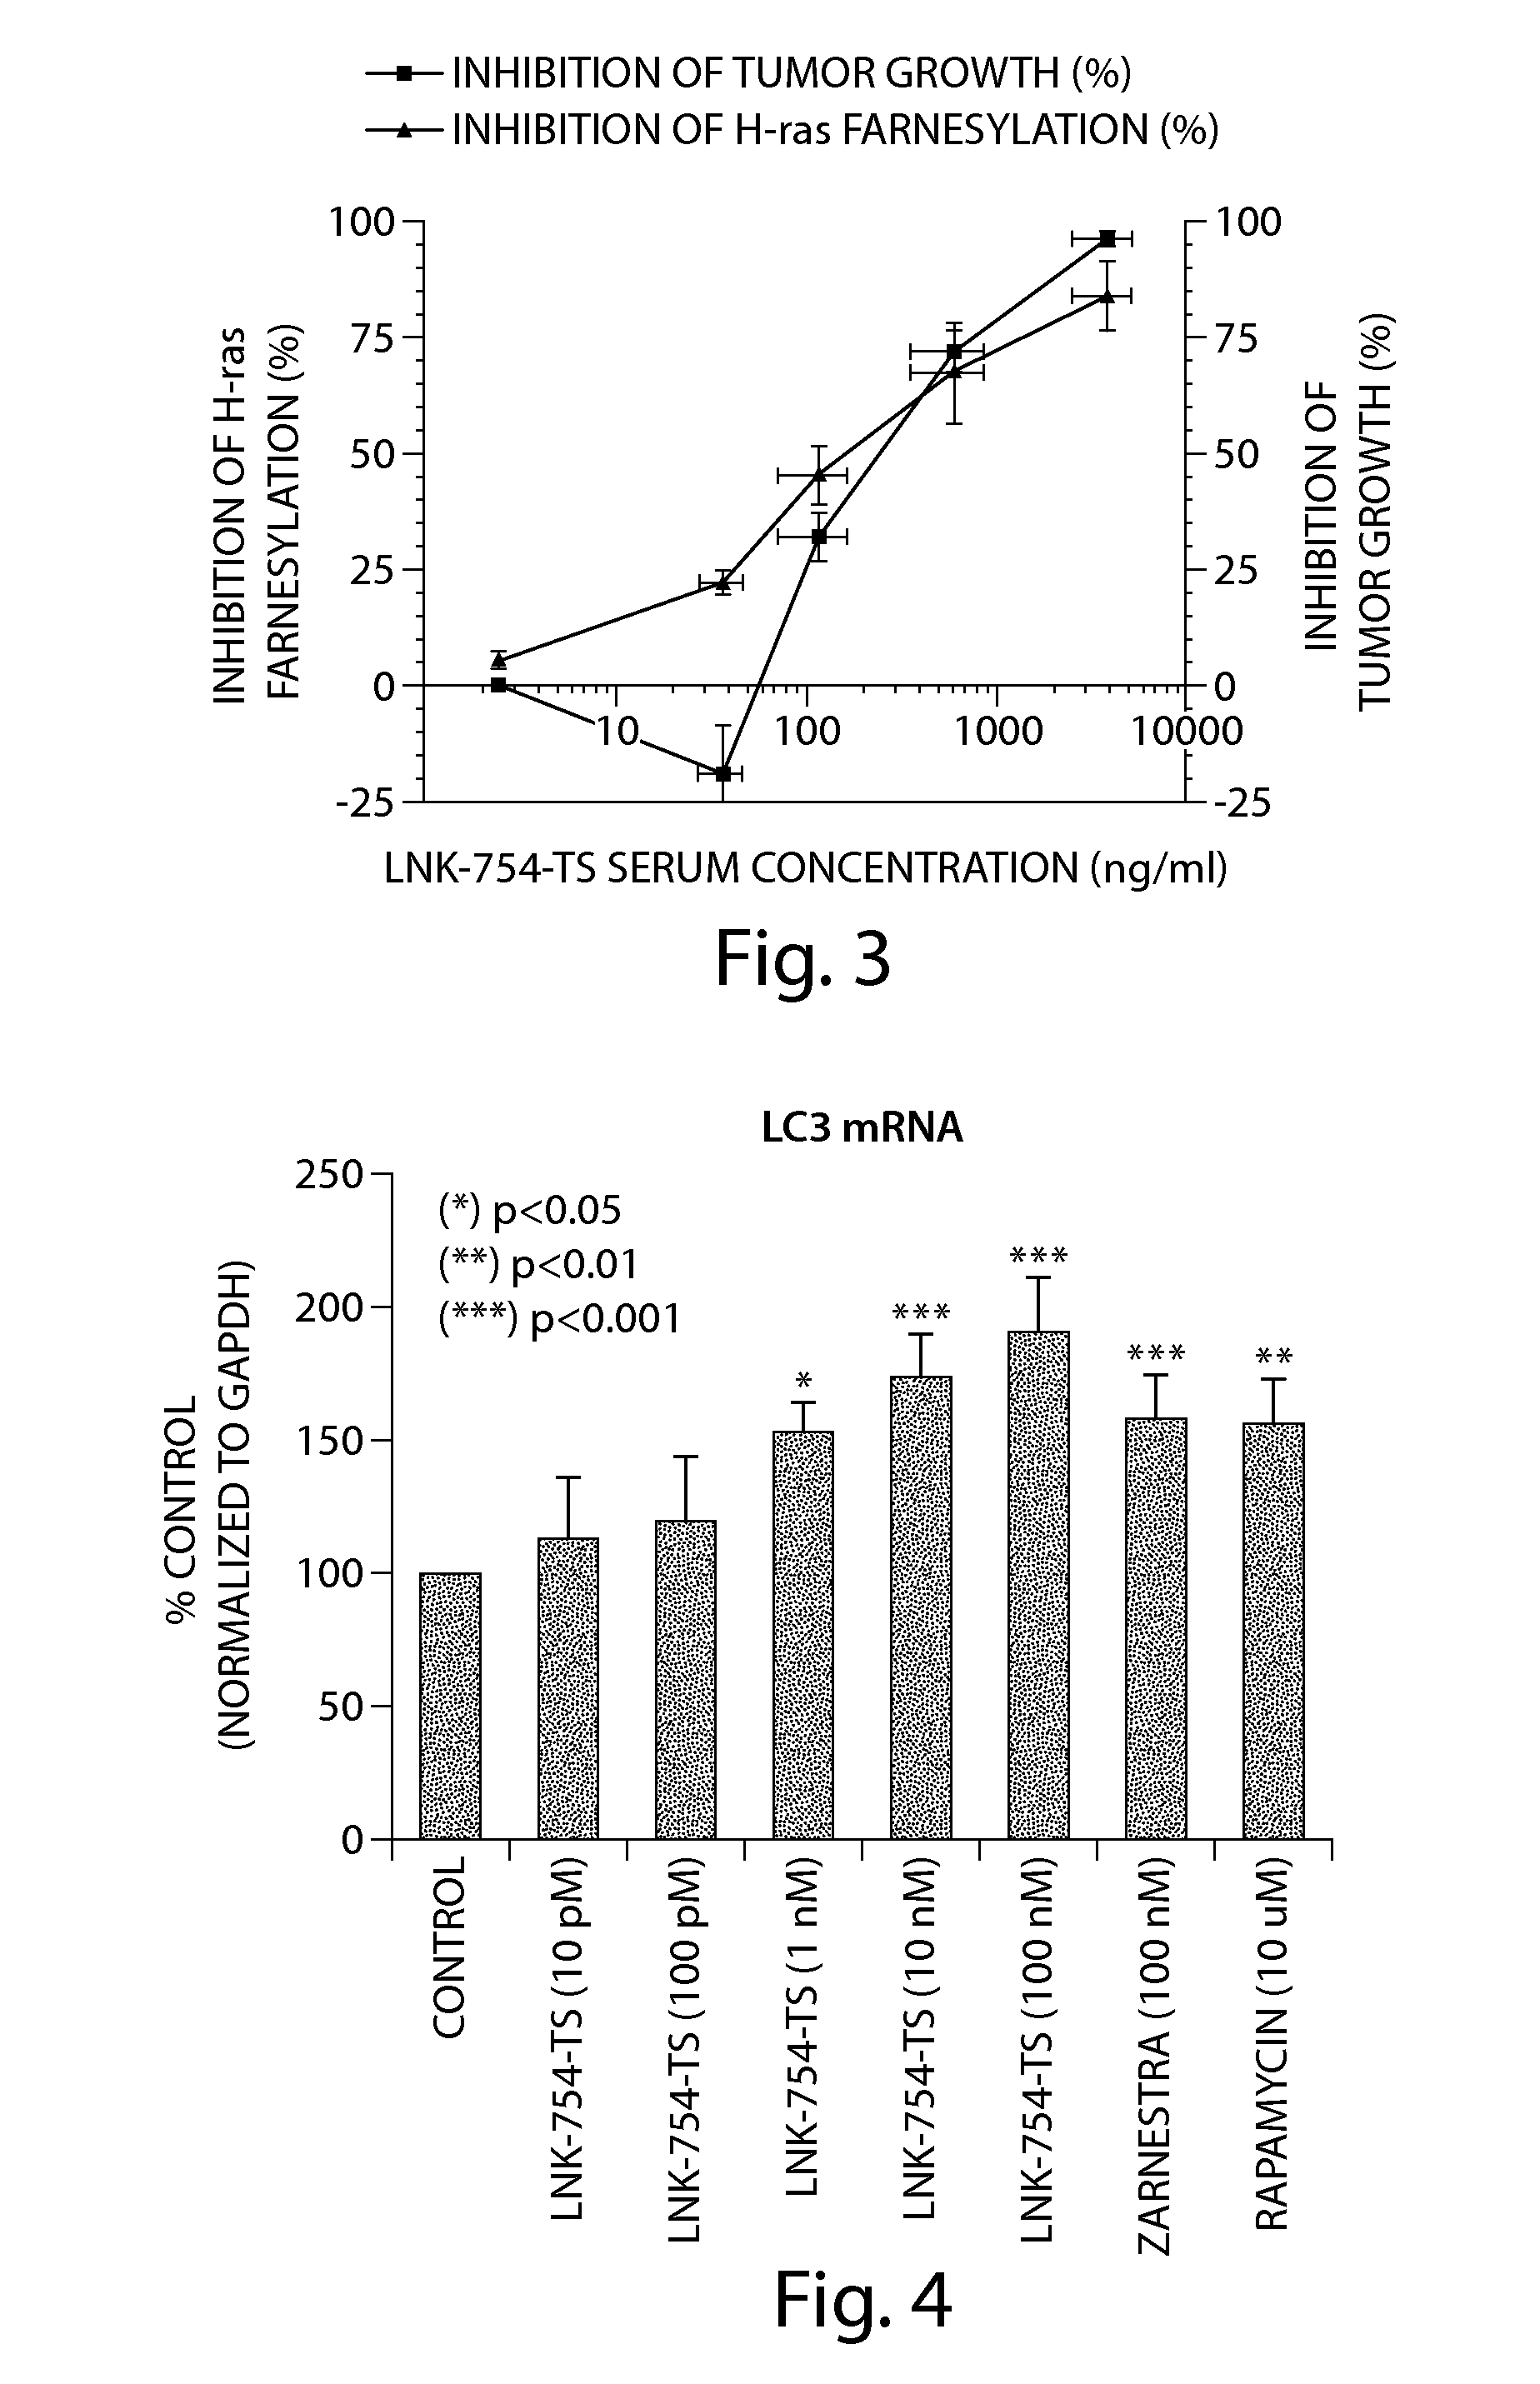 Treatment of proteinopathies using a farnesyl transferase inhibitor